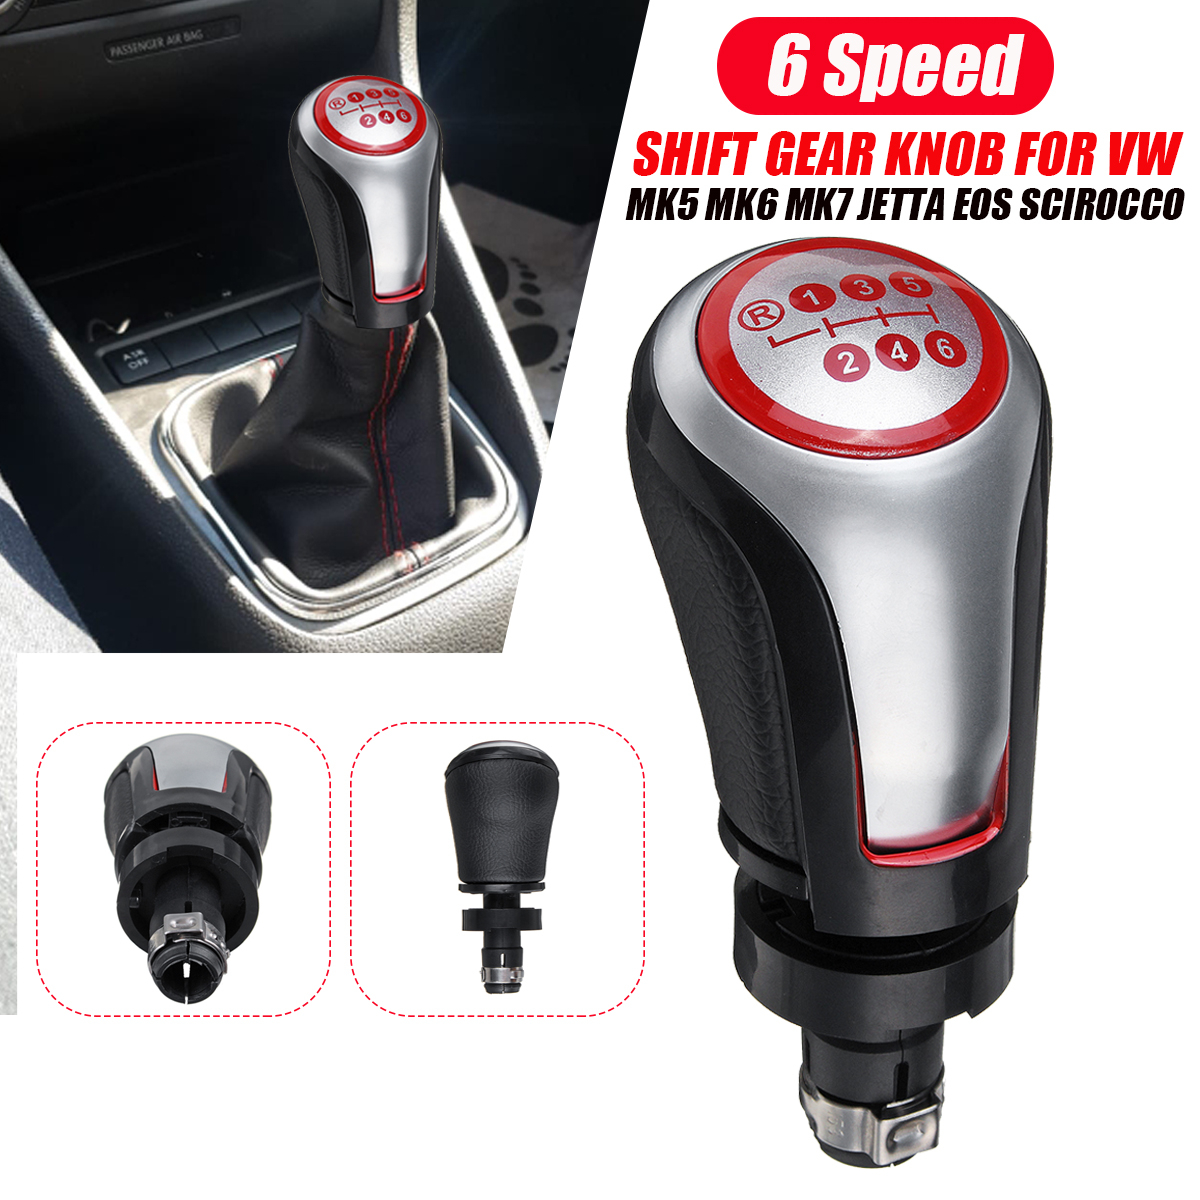 5/6 Speed Shift Gear Knob PU Leather for VW Golf MK5 MK6 MK7 Jetta EOS Scirocco - Auto GoShop